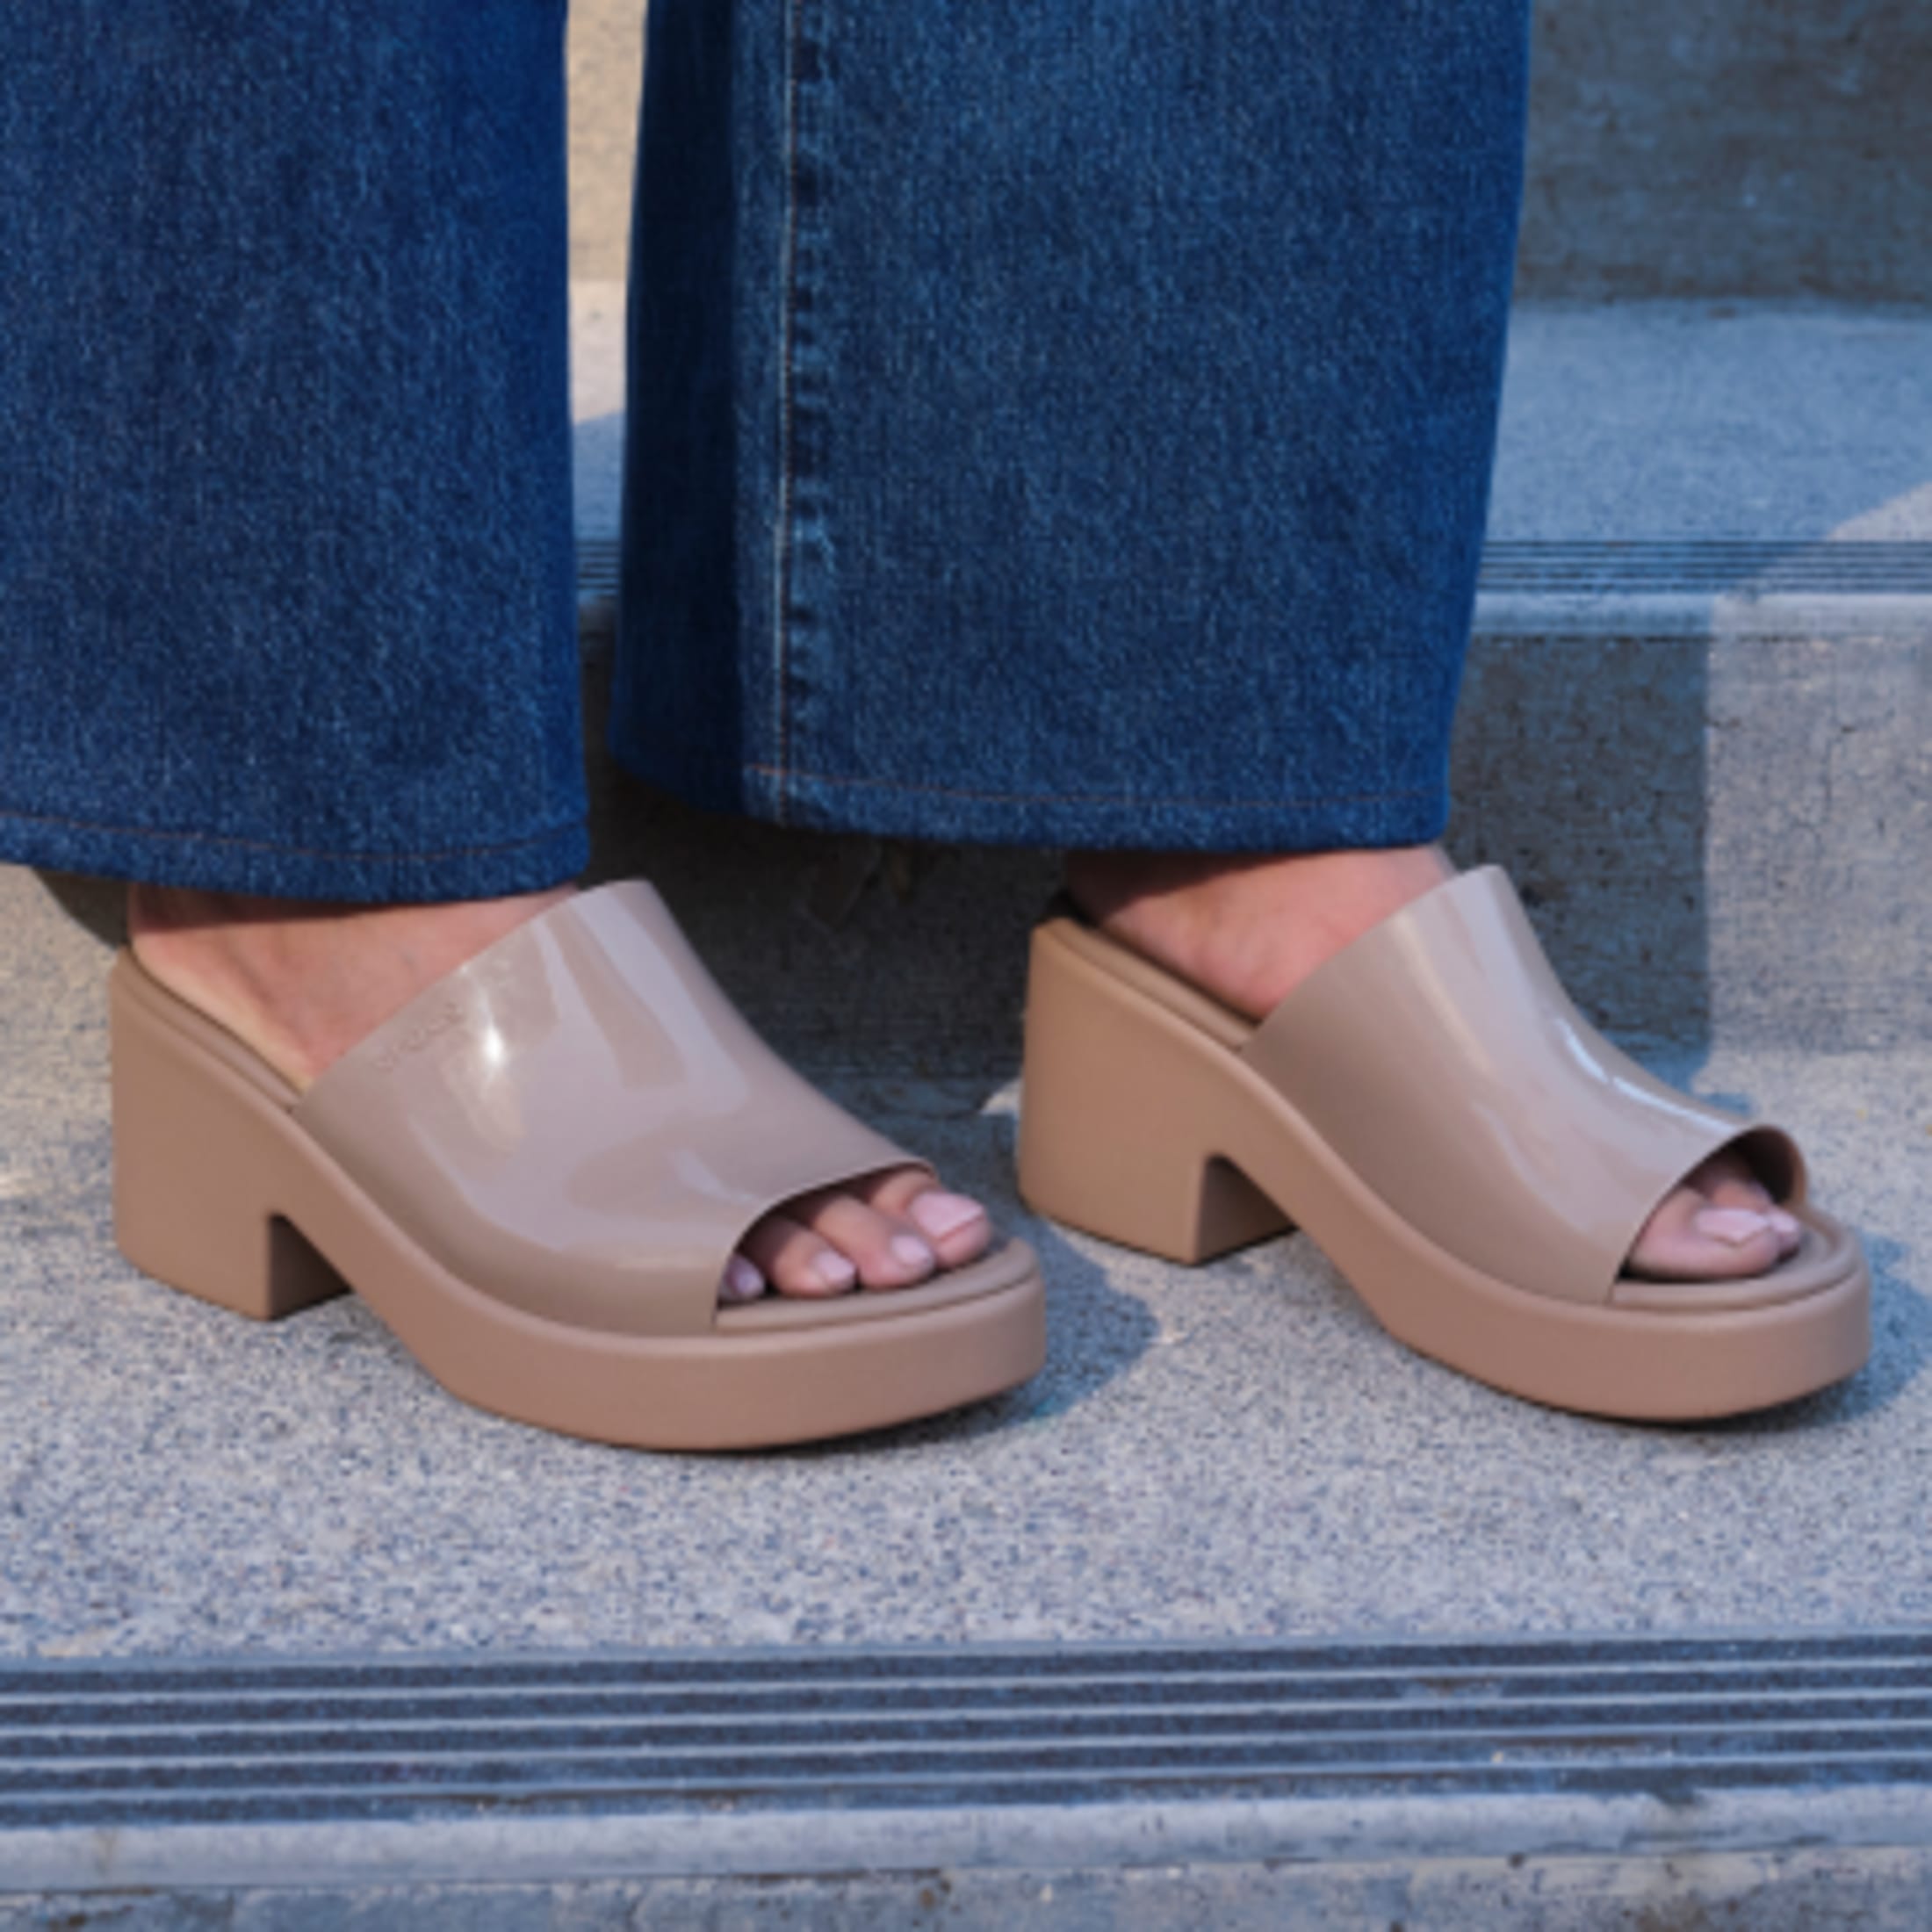 Women's Sandals: Cute, Comfortable, & Stylish